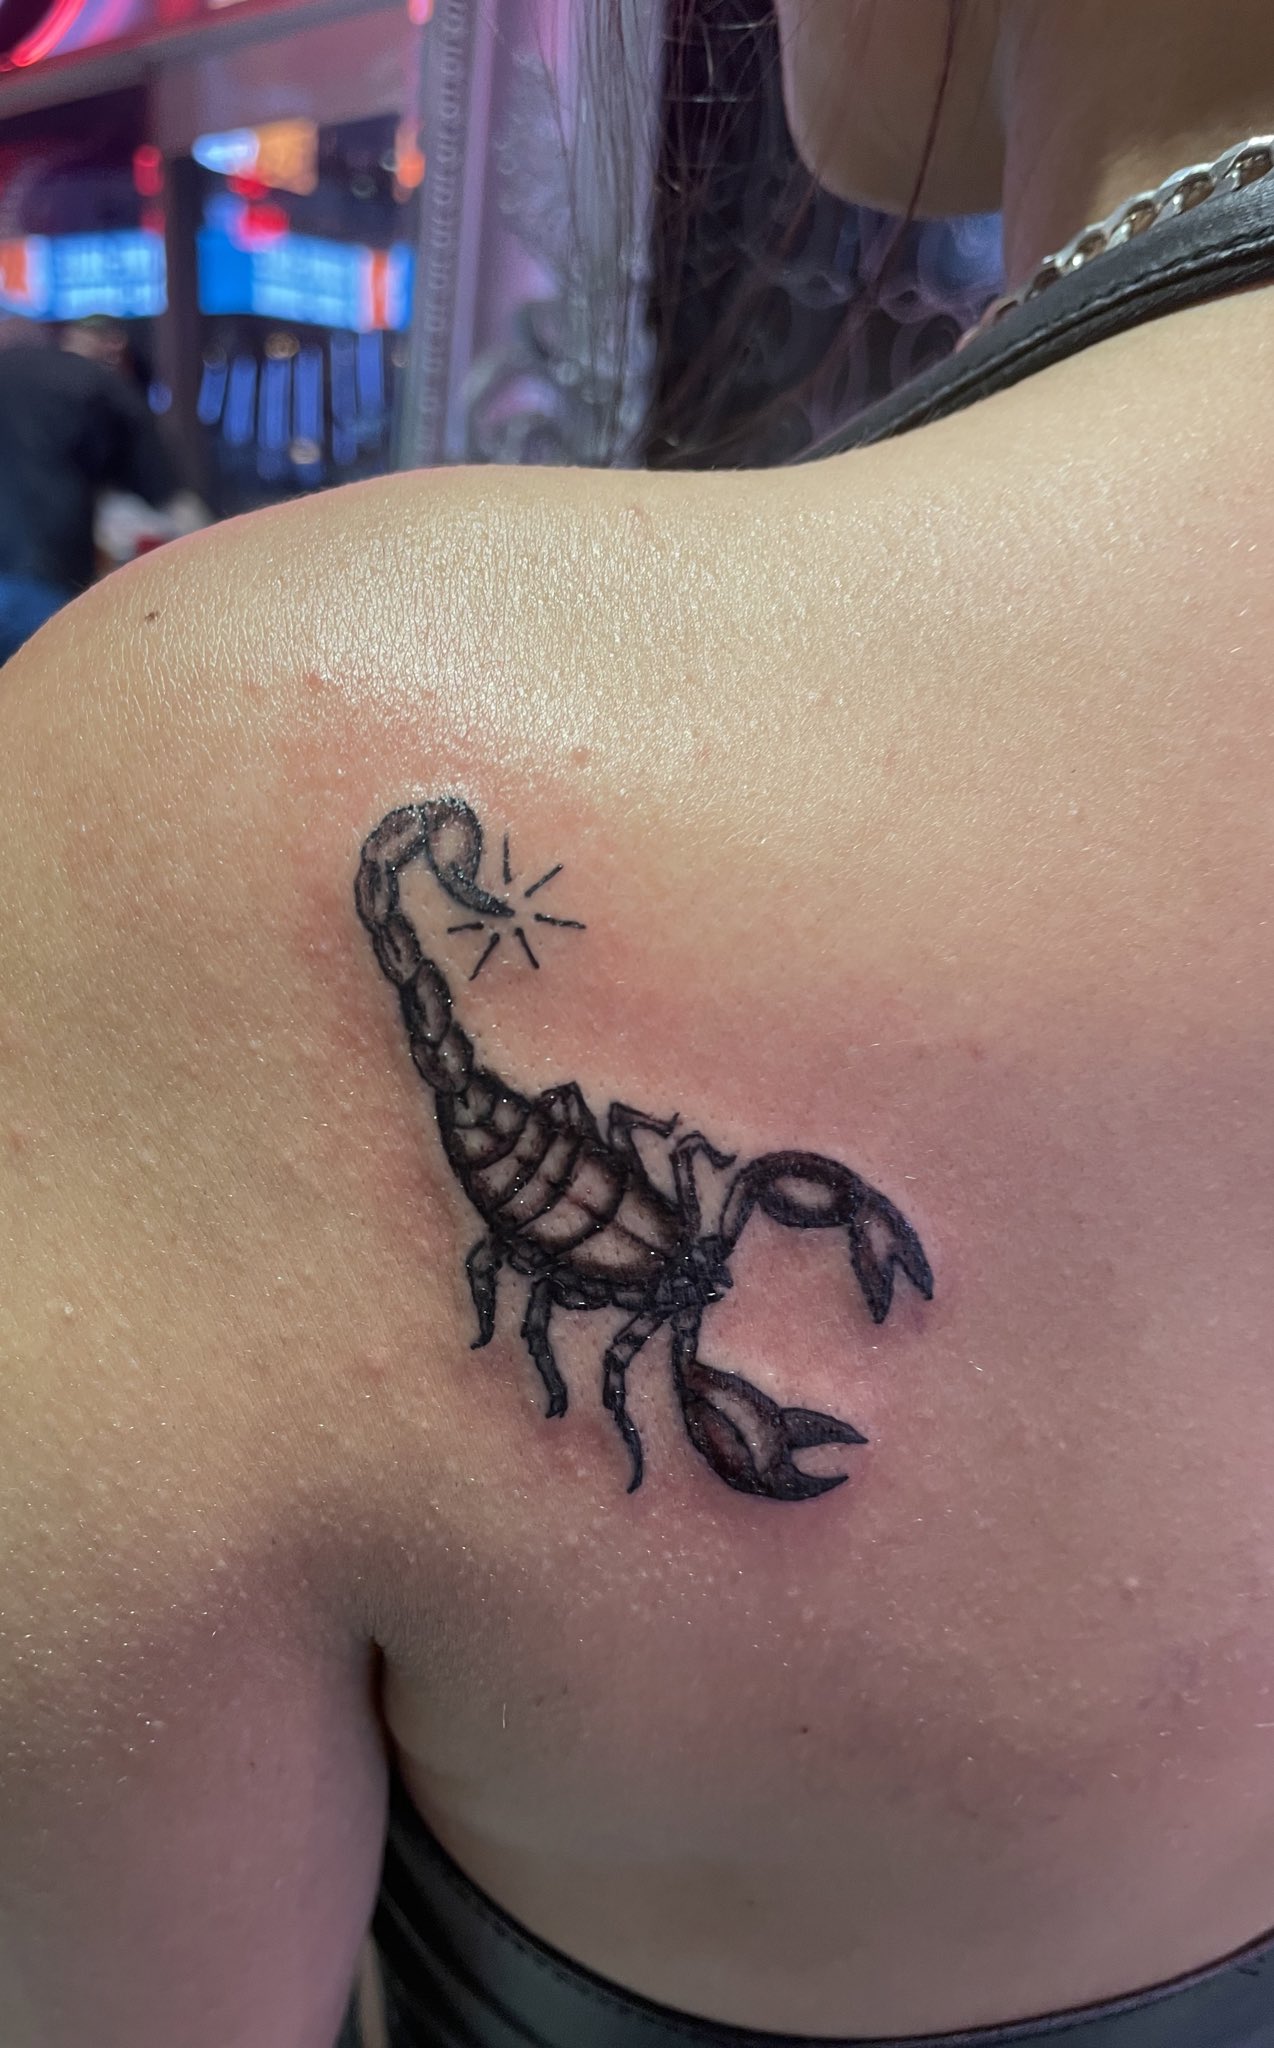 Line art scorpion tattoo on the forearm.